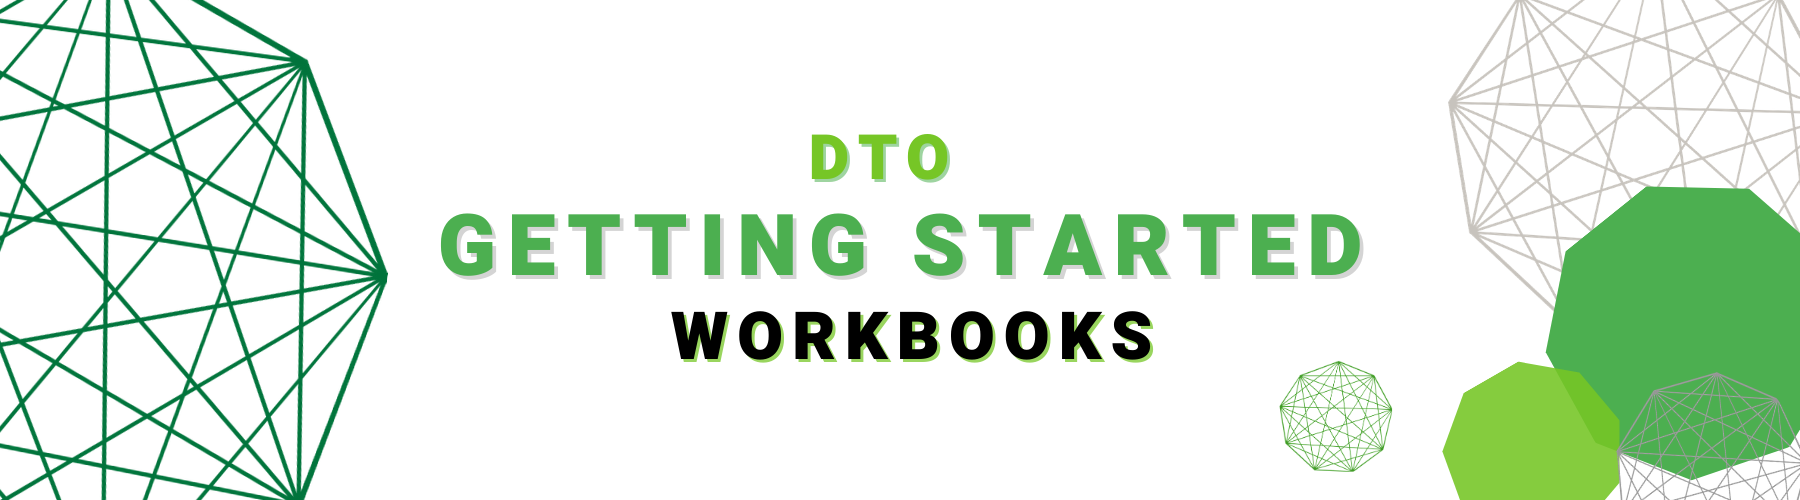 DTO Getting Started Workbooks